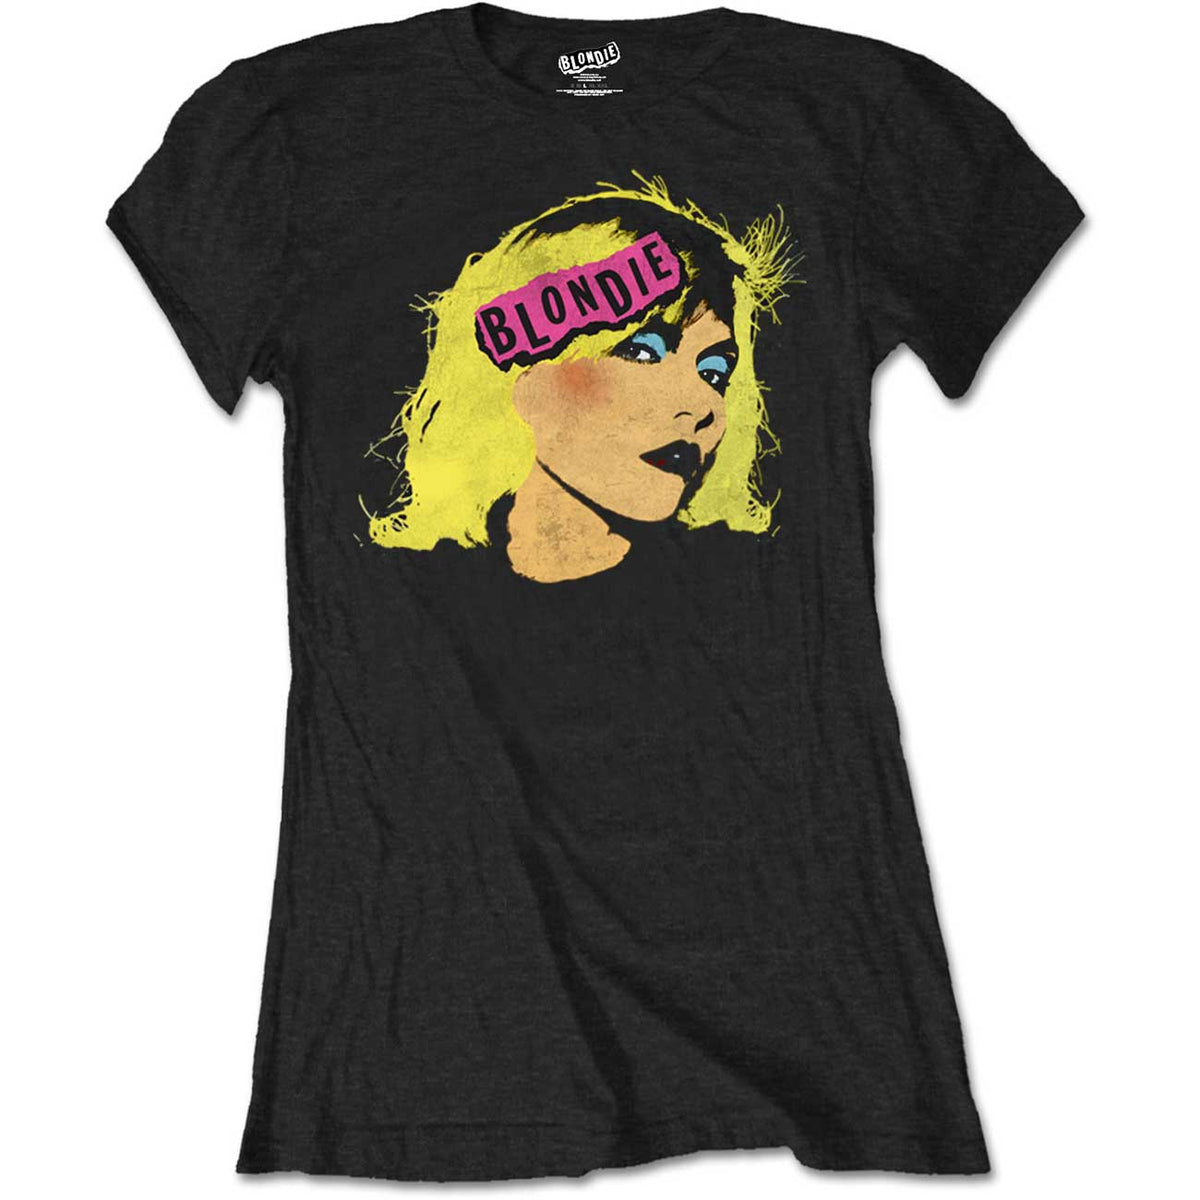 Blondie Ladies T-Shirt - Punk Logo - Black Official Licensed Design